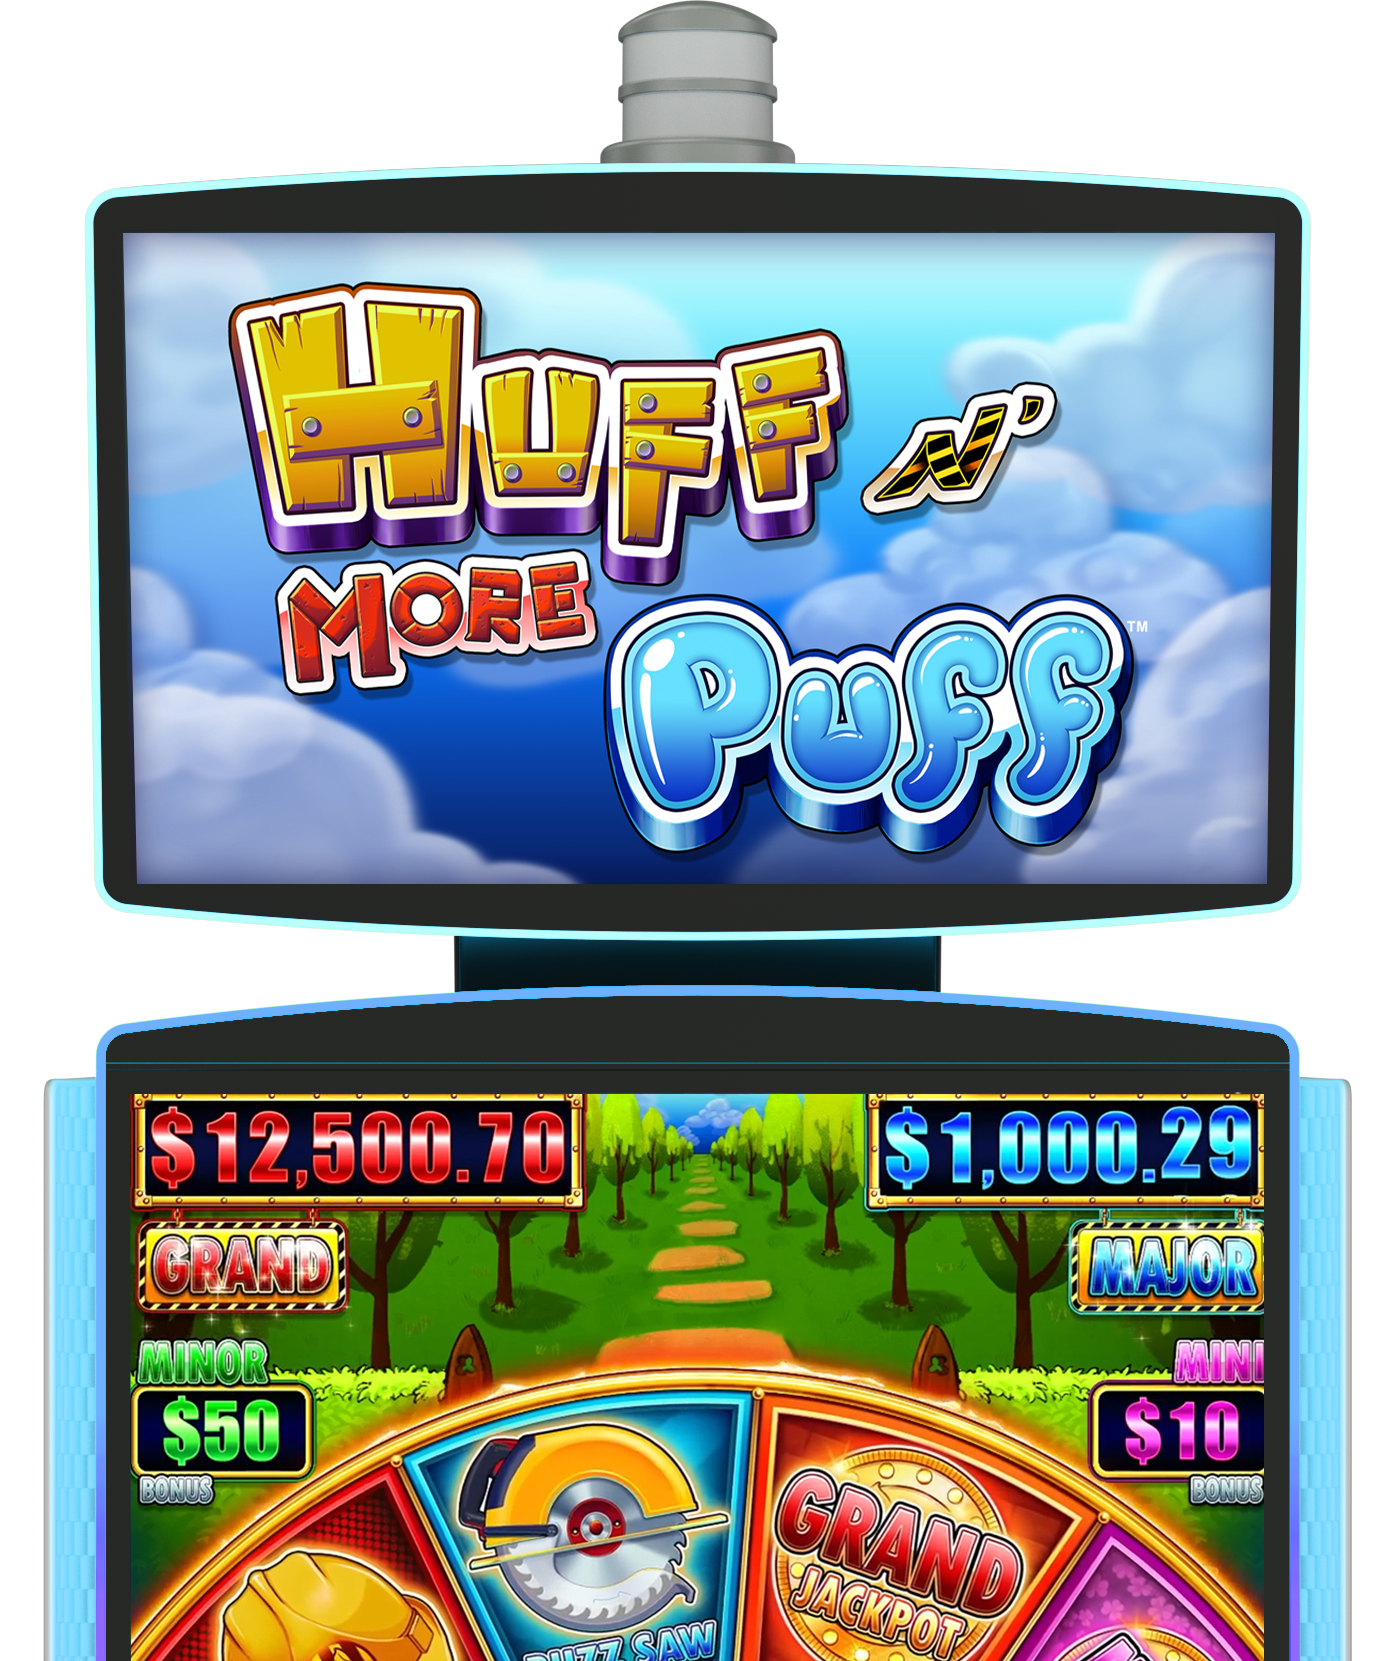 Huff N More Puff Slot Game at Rio Hotel & Casino Las Vegas